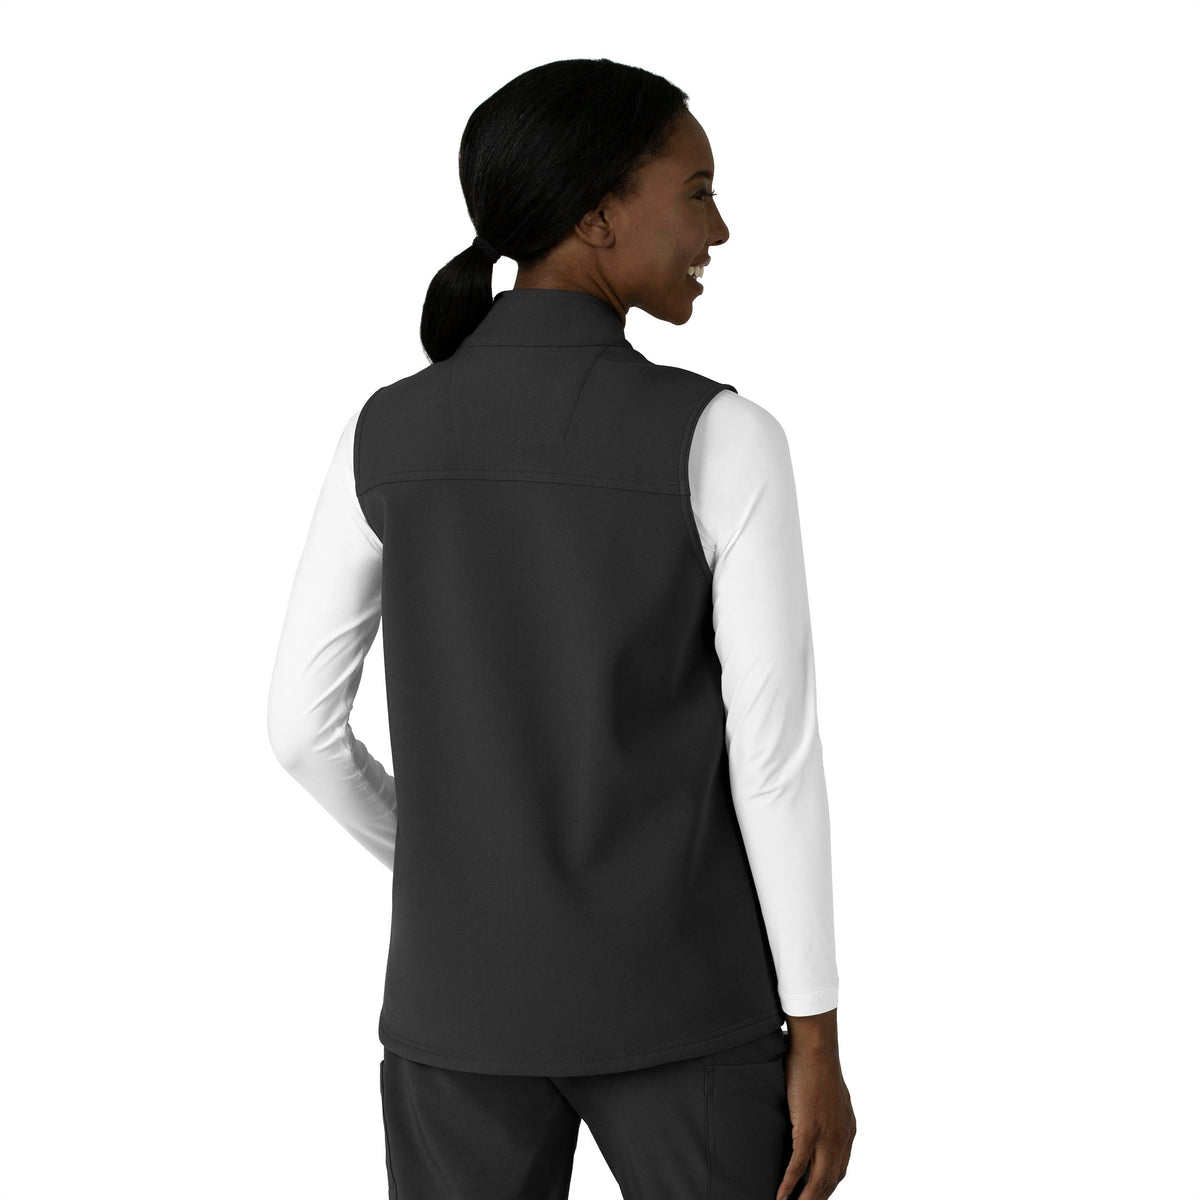 Rugged Flex Women's Bonded Fleece Vest Black back view